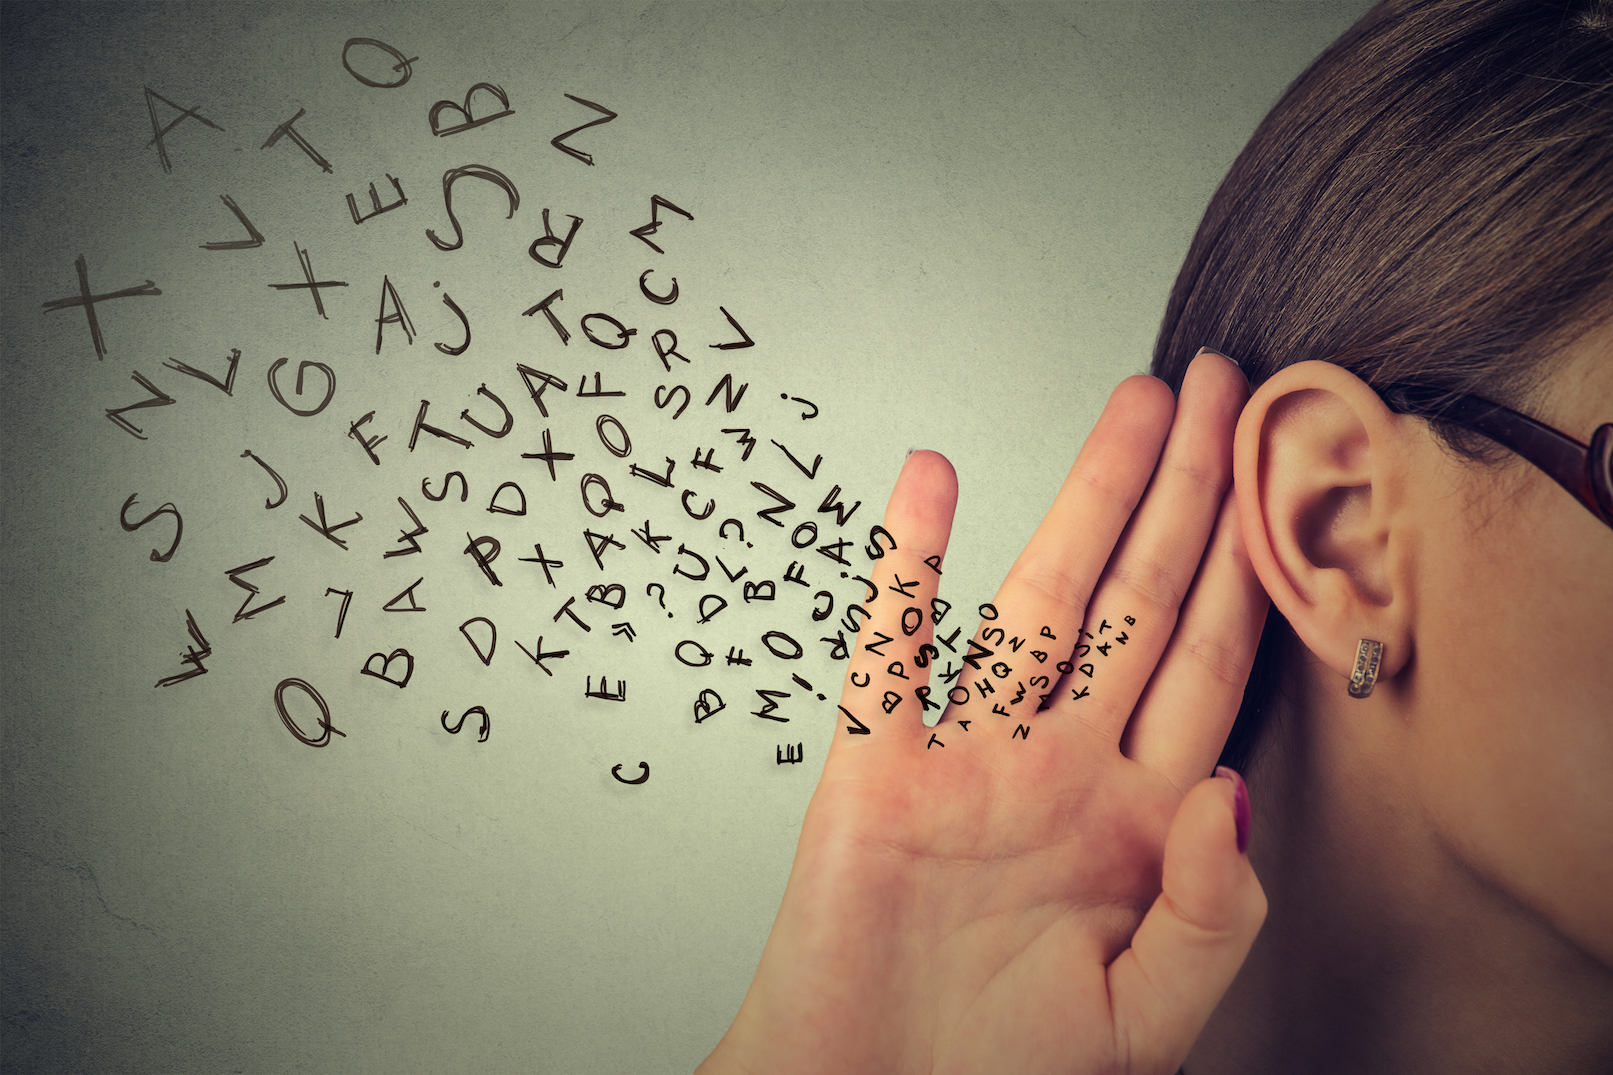 Purchase Ear Technology Hearing Loss Paducah